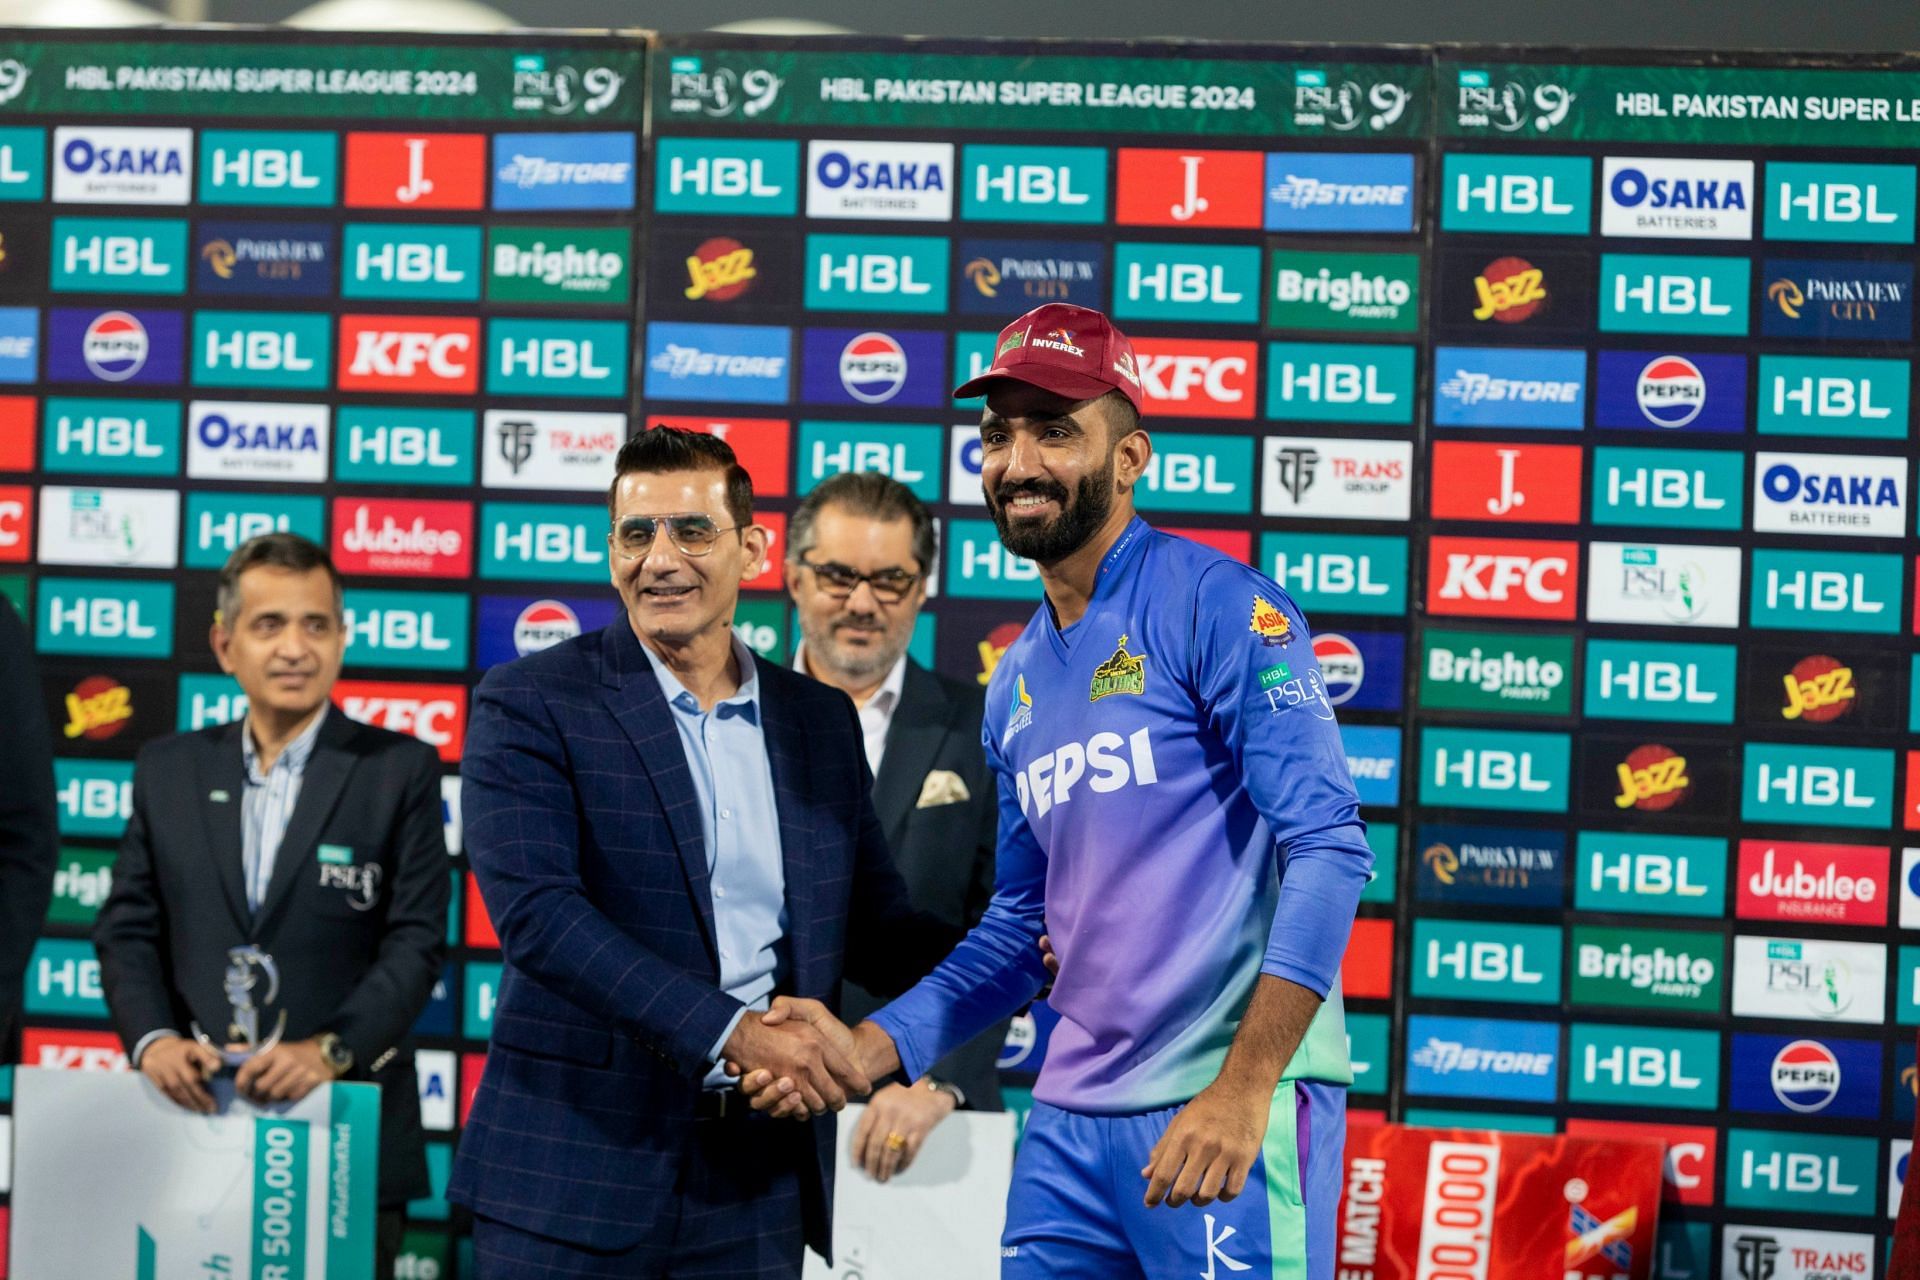 Usama Mir receiving an award (Image Courtesy: X/Pakistan Super League)